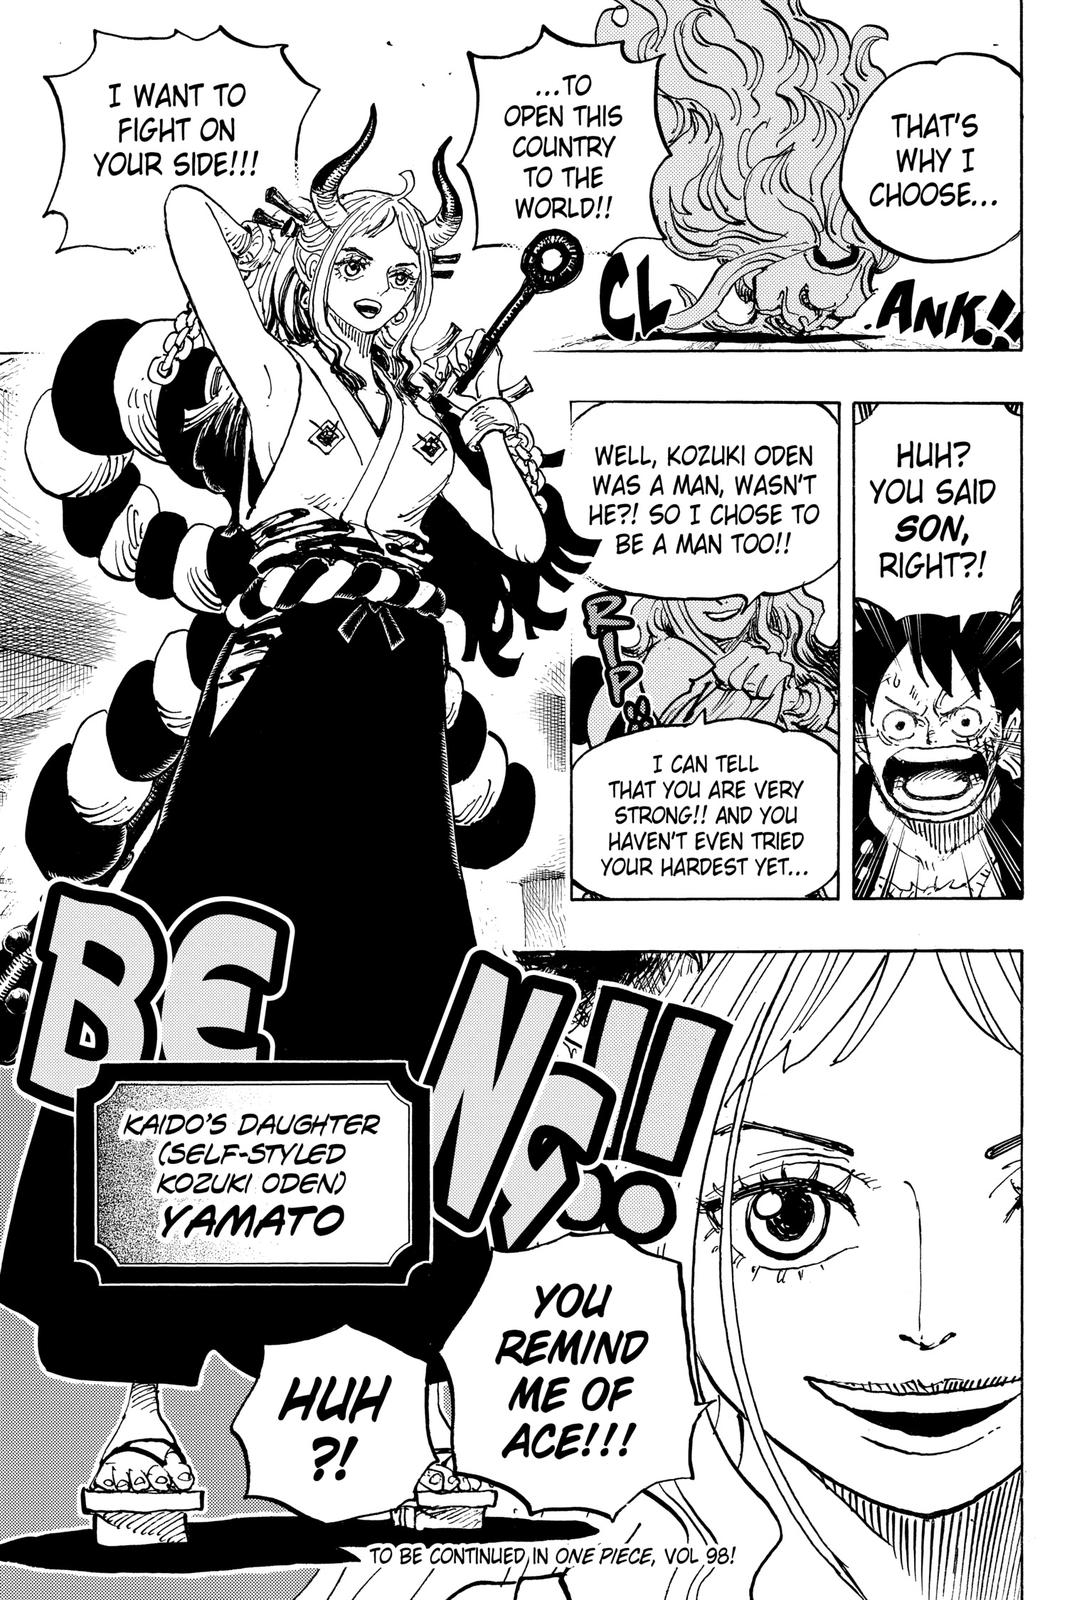 Yamato's introduction